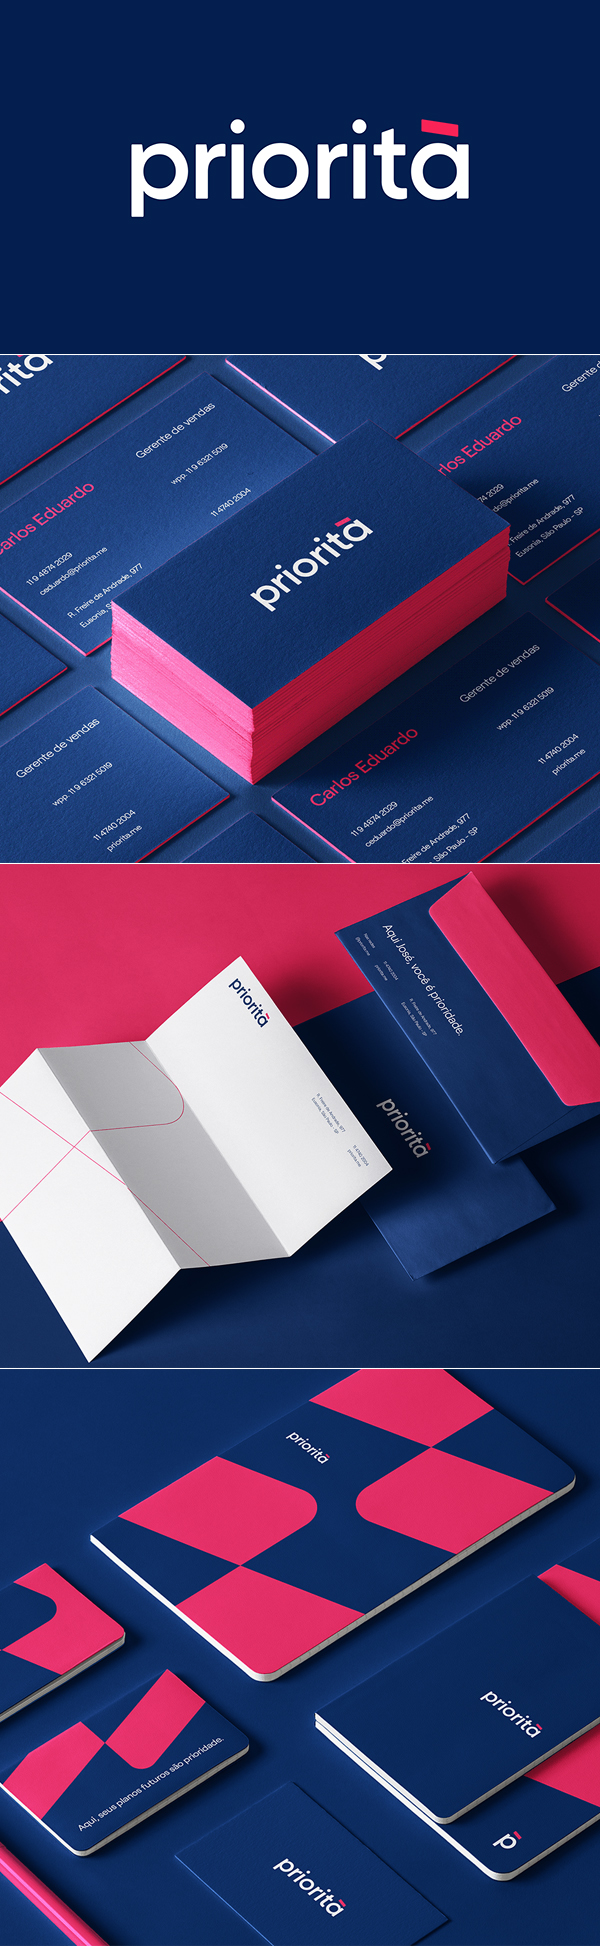 Business Card - Priorita Joao Branding Identity by Marcos